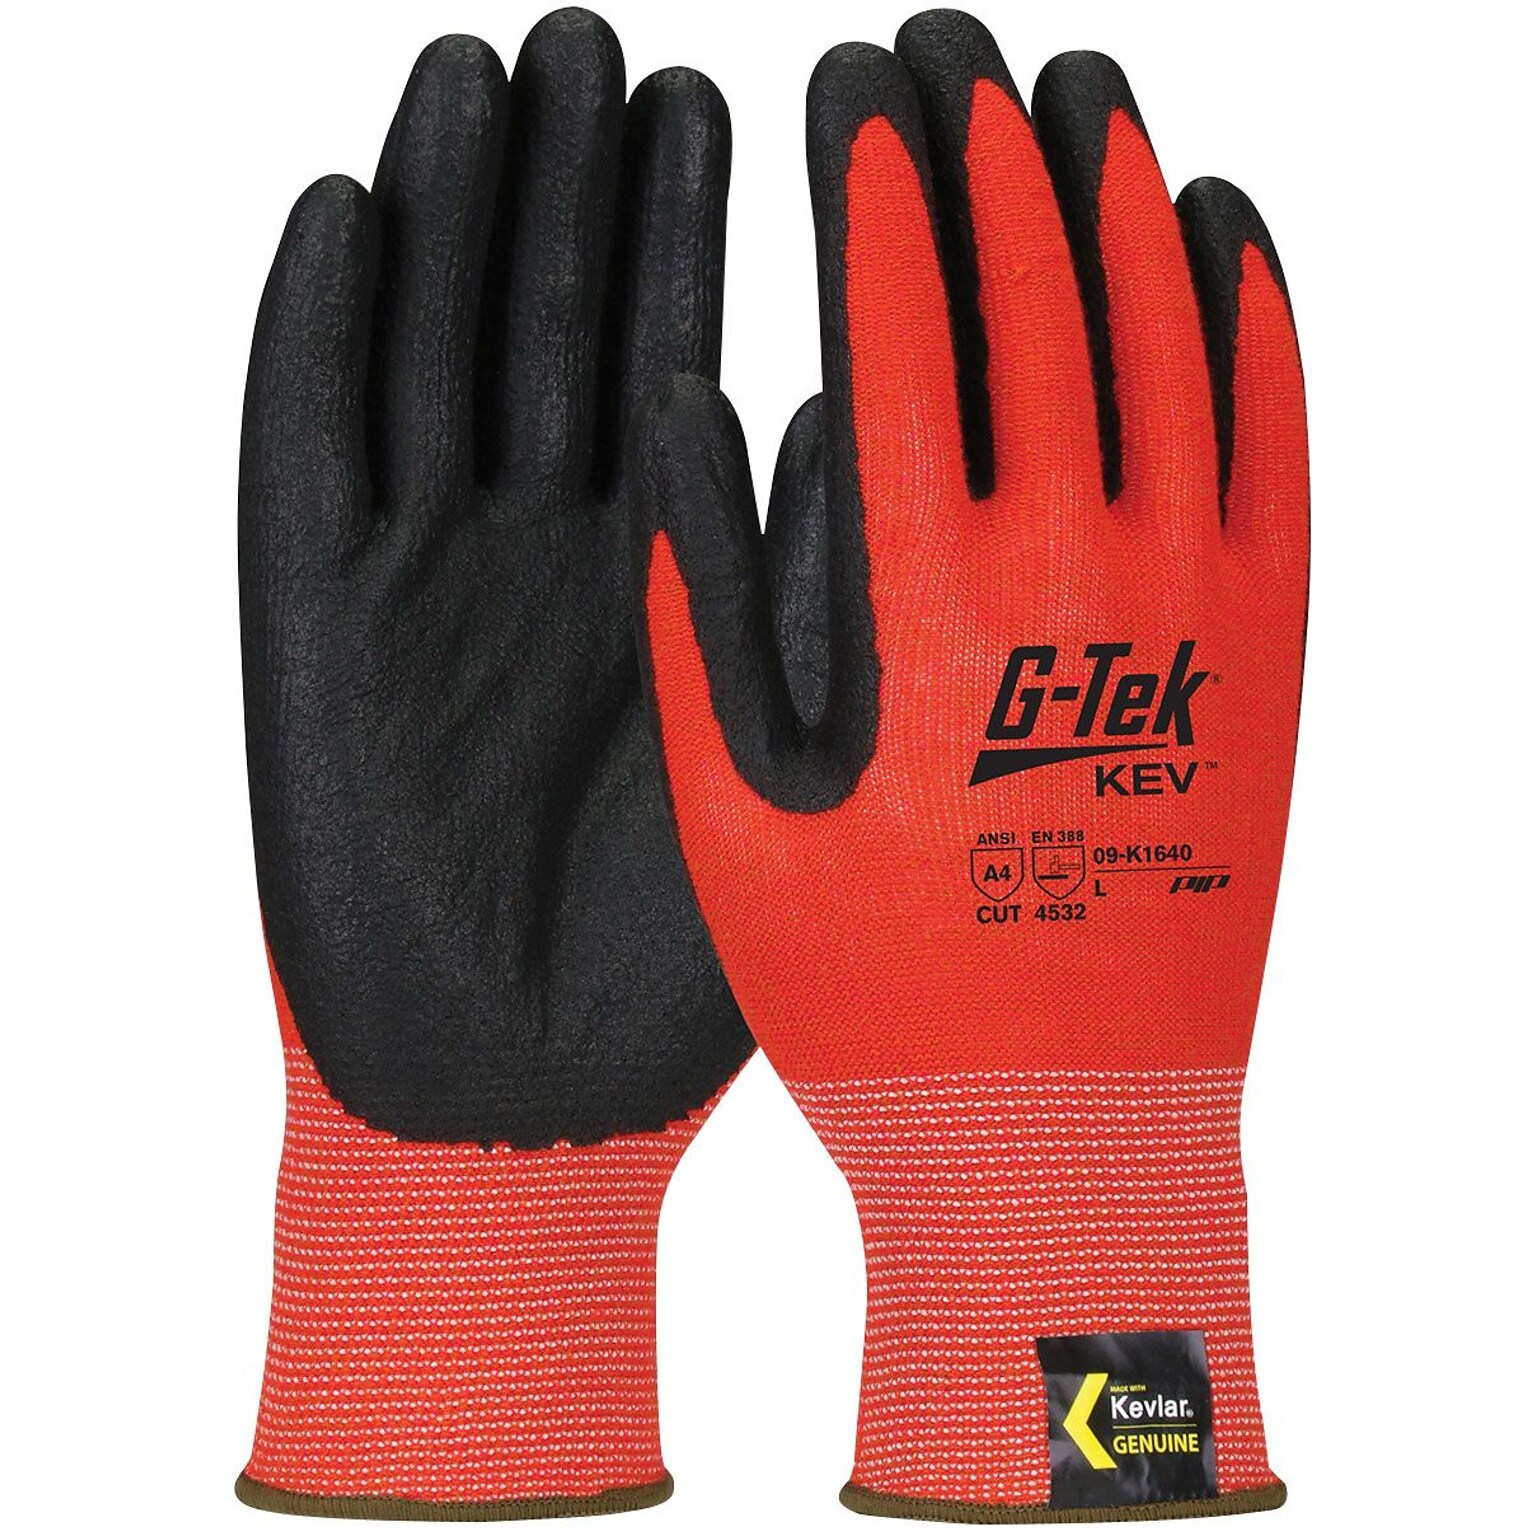 G-Tek KEV Nitrile Foam Work Gloves, Kevlar Engineered Yarn, Red, Large, 1 Pair (09-K1640/L)